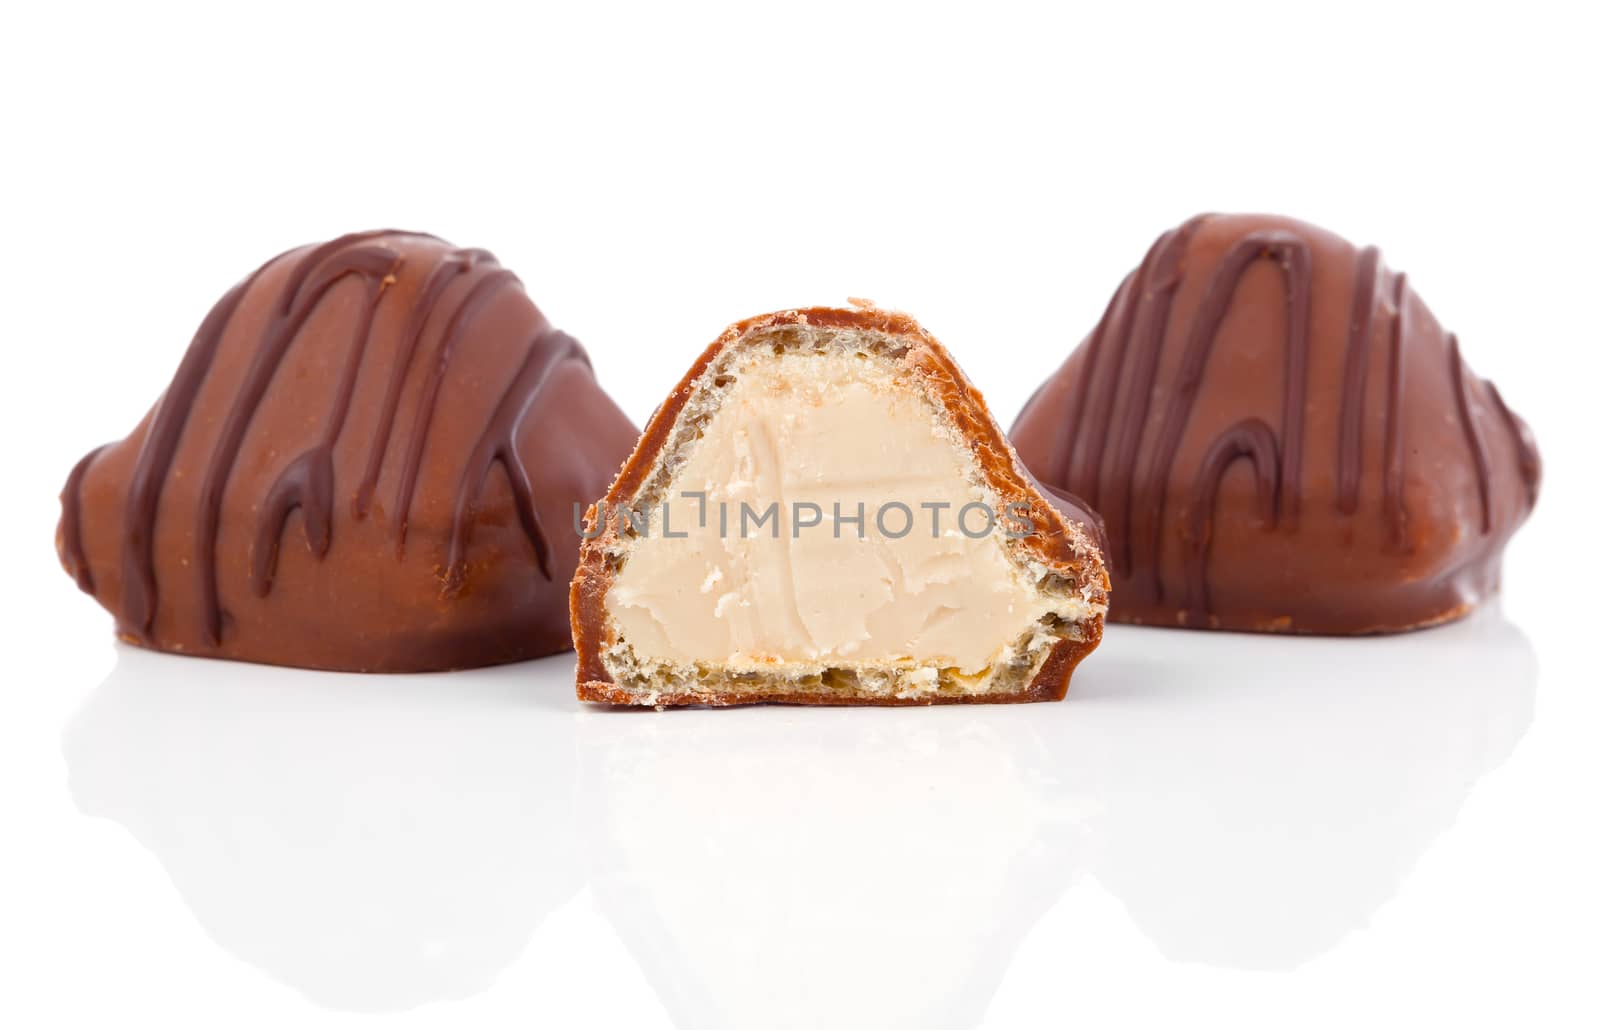 Studio macro of delicious chocolates on a white background by motorolka